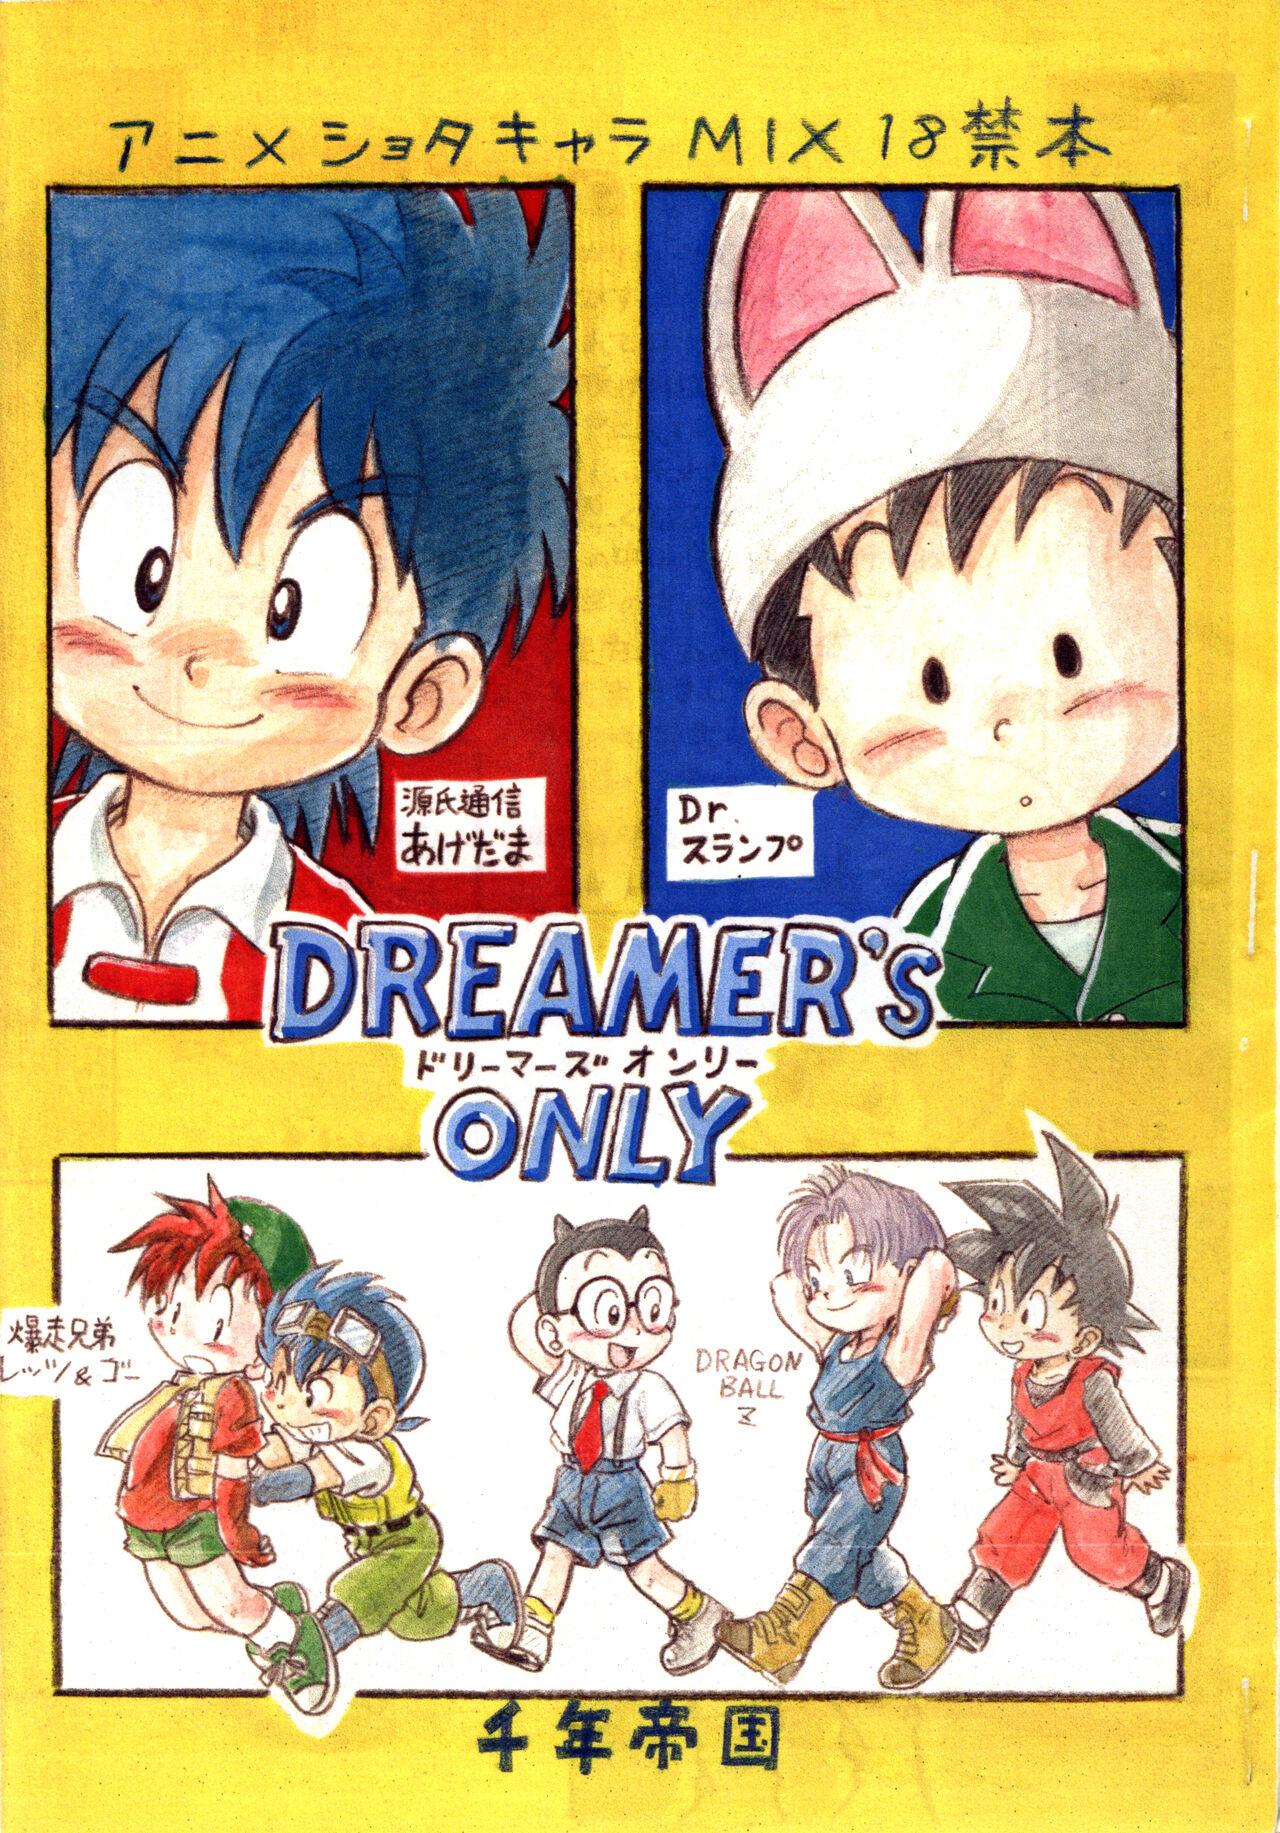 Spooning DREAMER’S ONLY - Dragon ball z Bakusou kyoudai lets and go Dr. slump Genji tsuushin agedama Thailand - Page 1